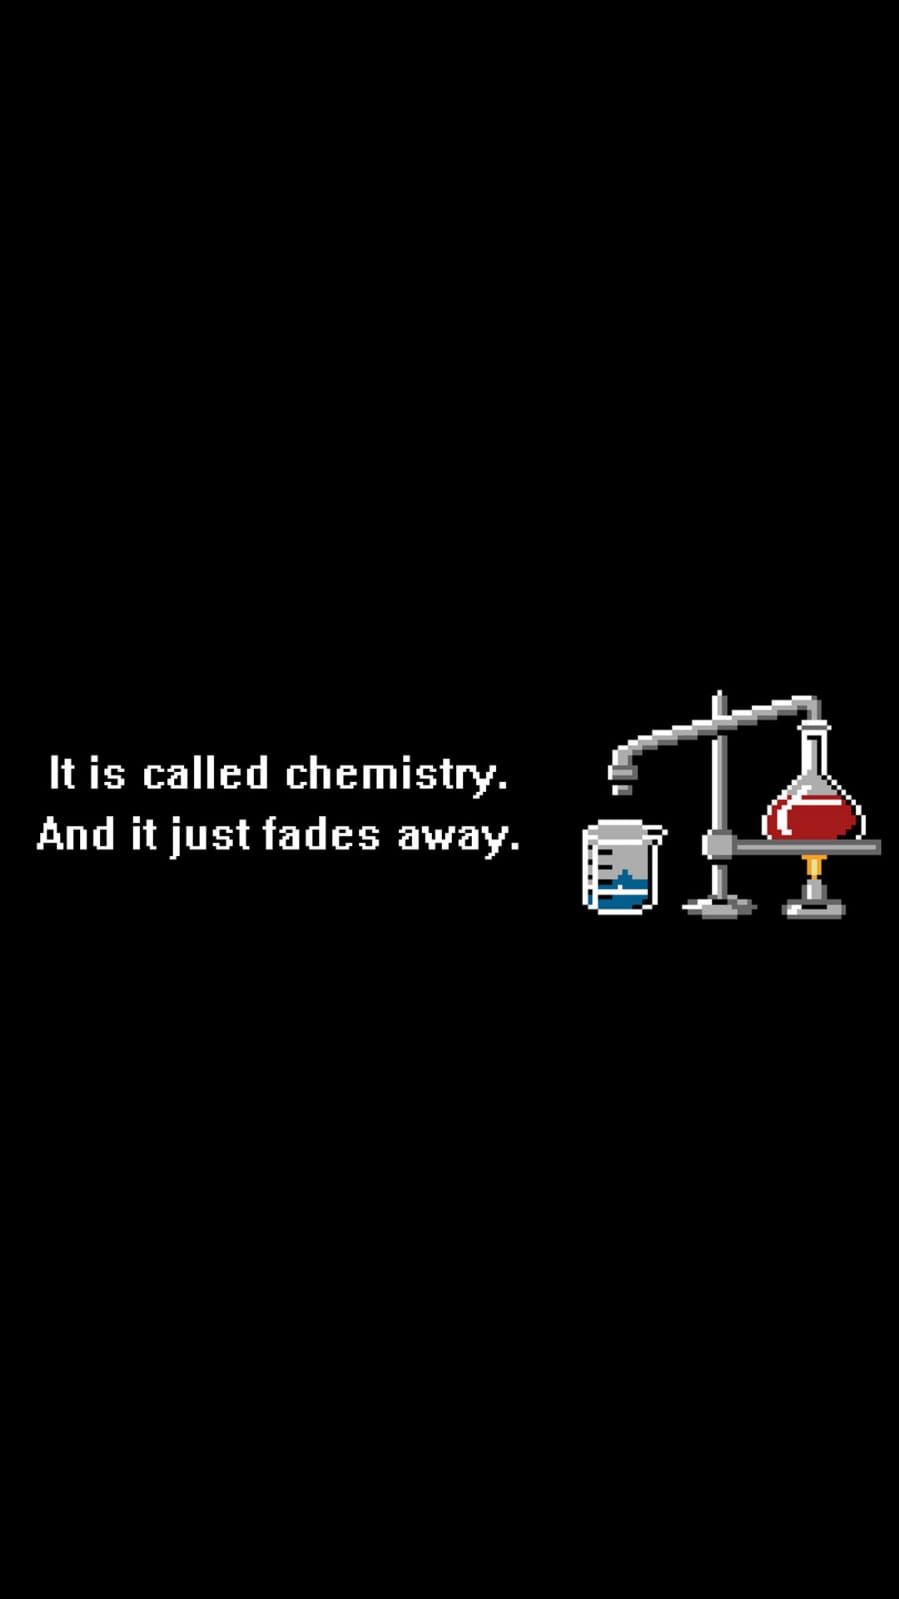 Just chemistry